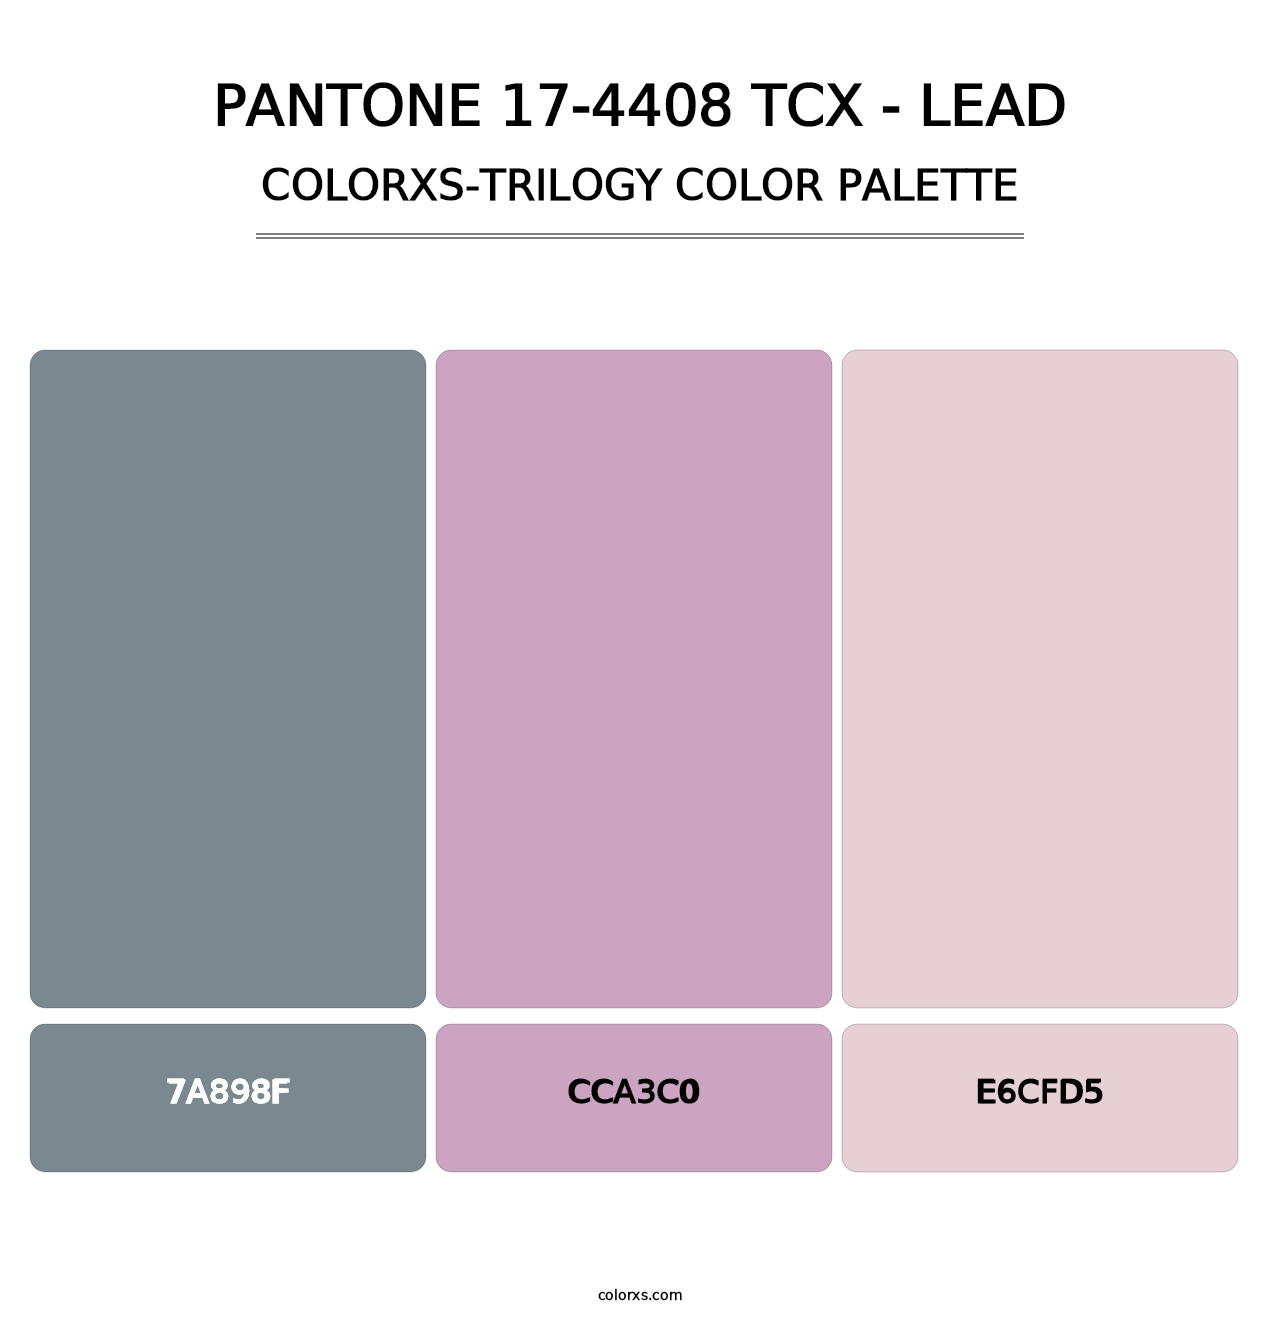 PANTONE 17-4408 TCX - Lead - Colorxs Trilogy Palette